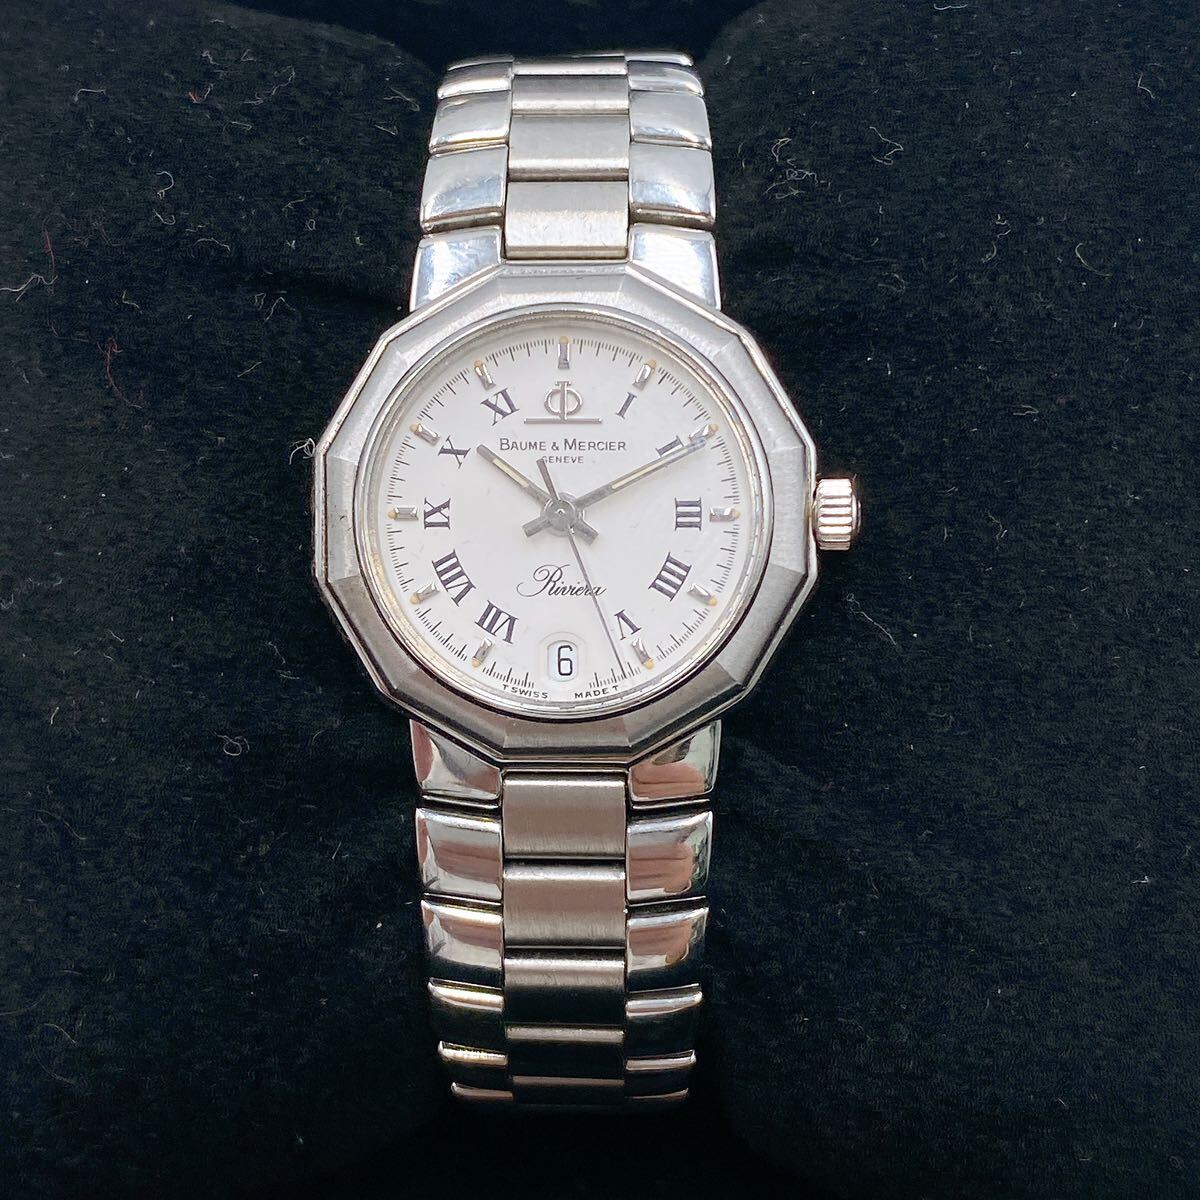 BAUME & MERCIER Riviera Baume&Mercier riviera quartz Date lady's wristwatch case attaching 